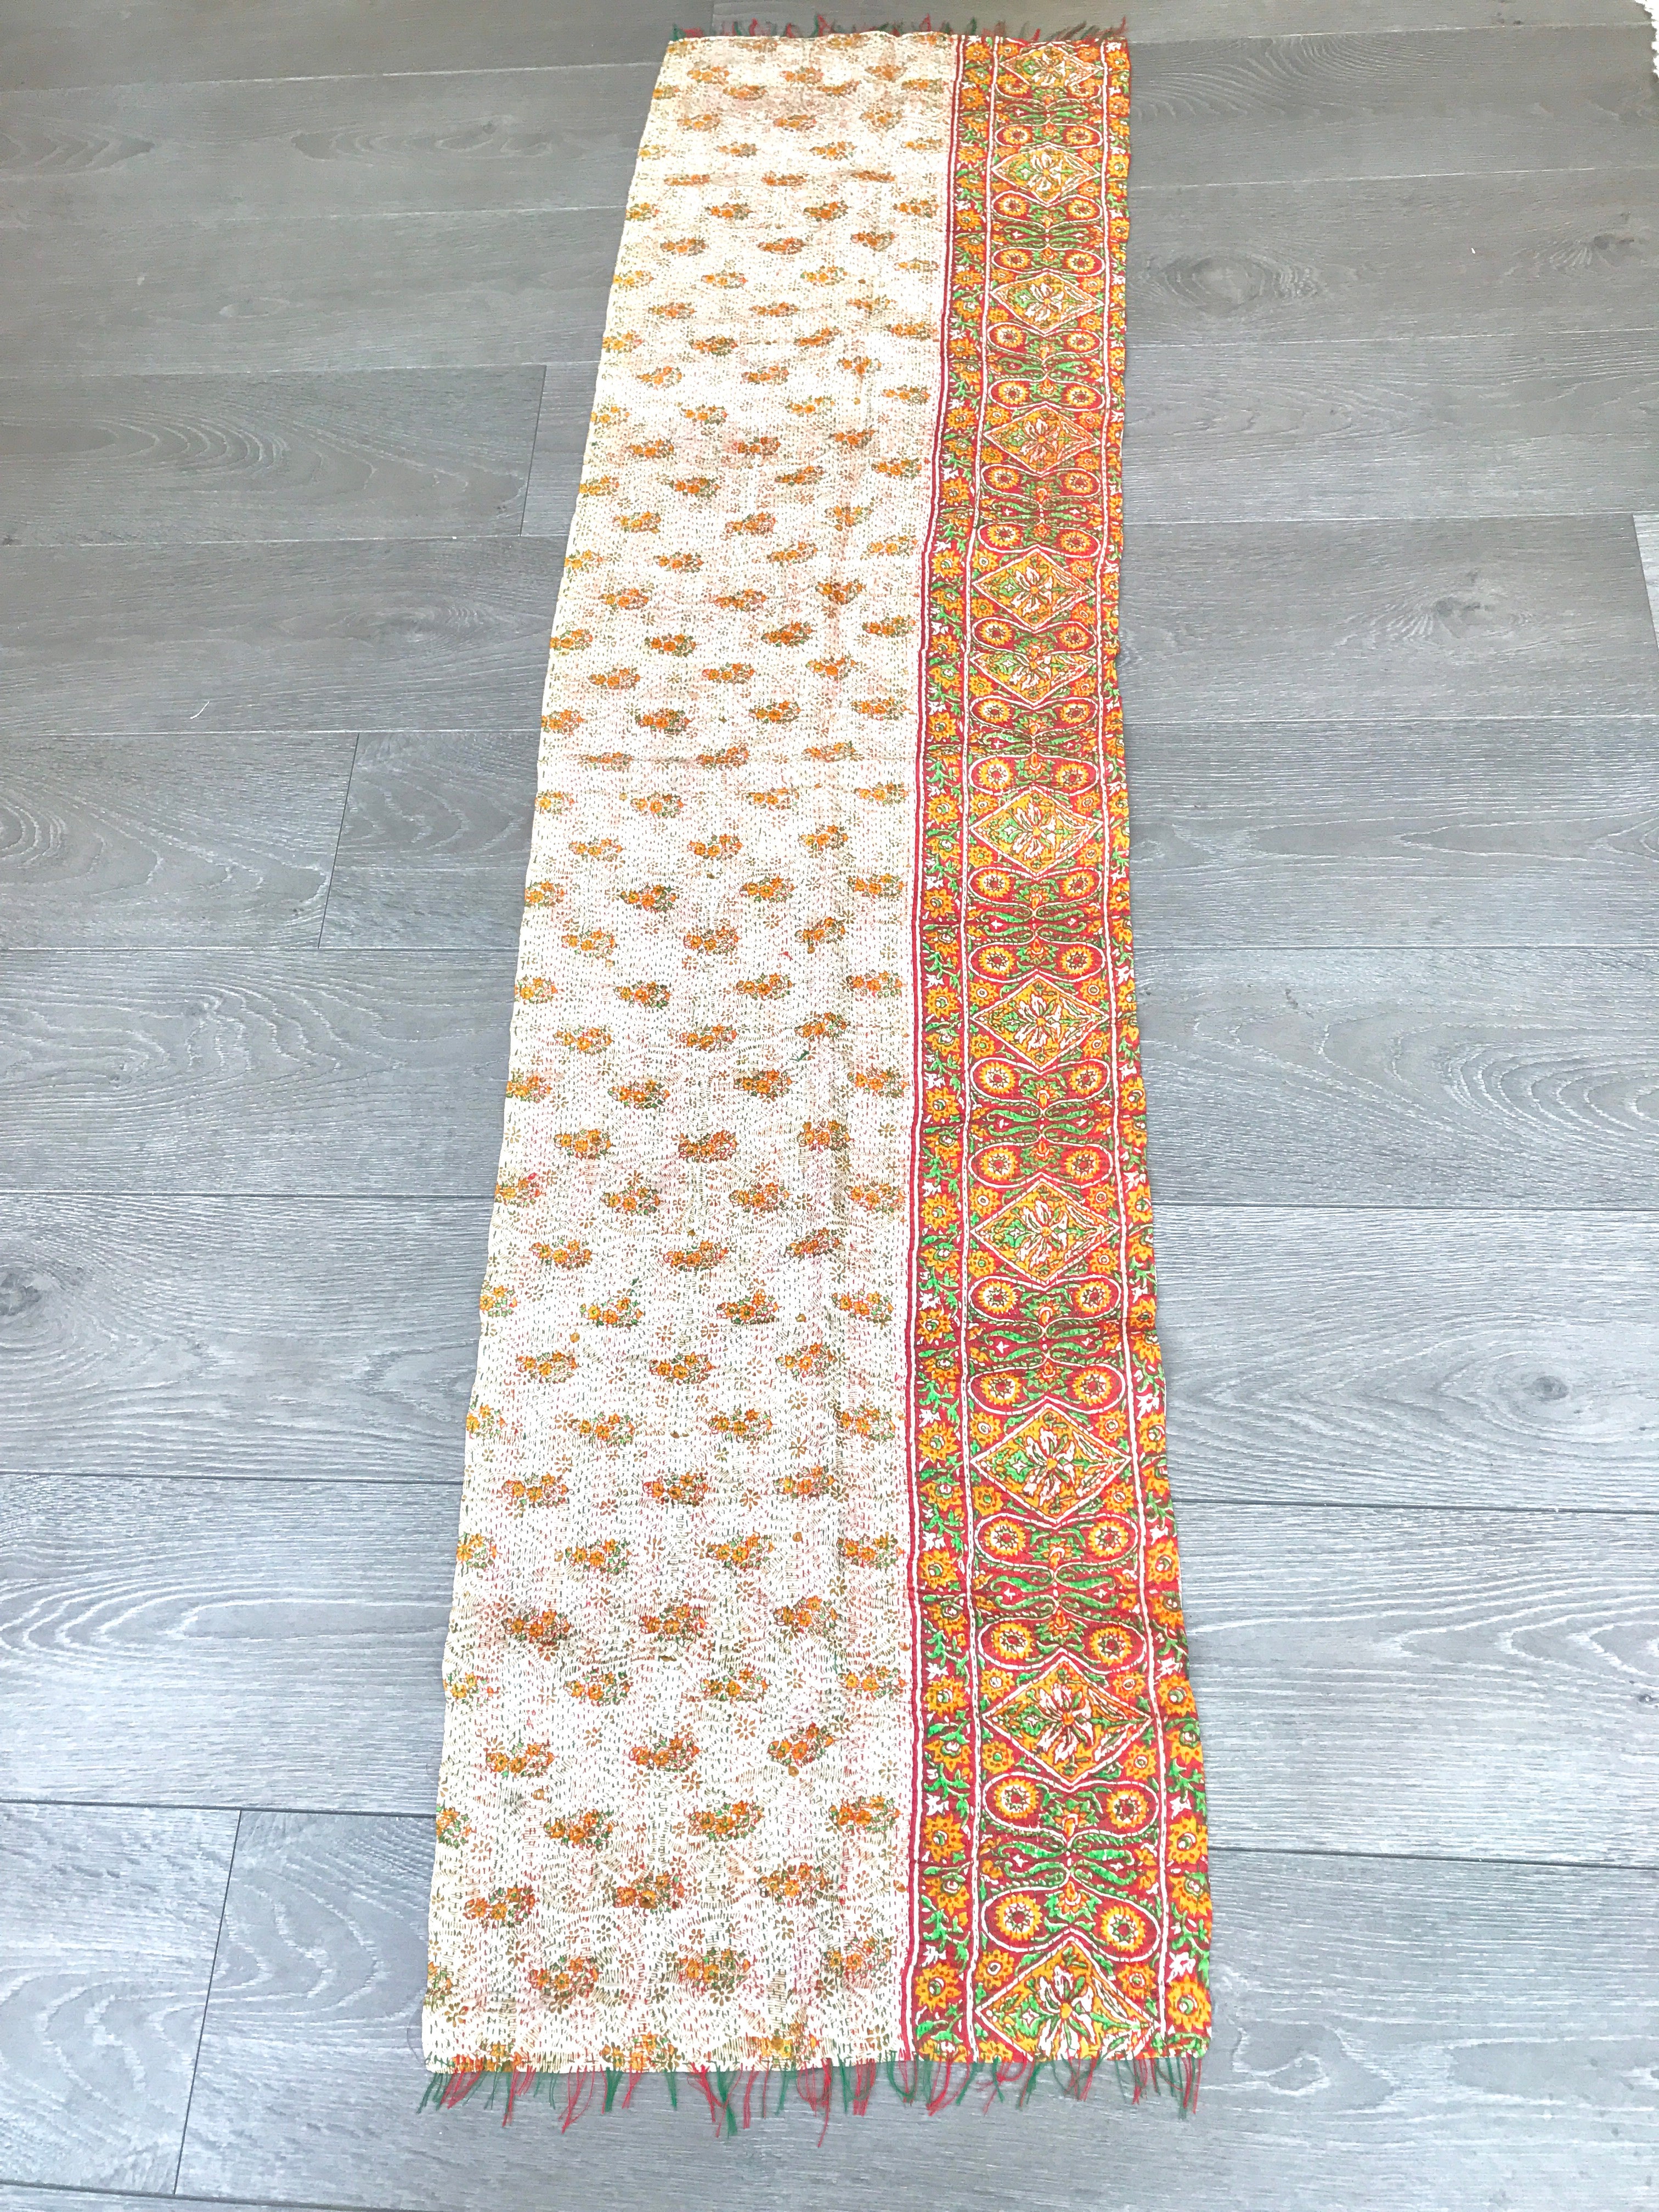 Vintage Double-Sided Sari Table Runner or Throw (Orange tones)